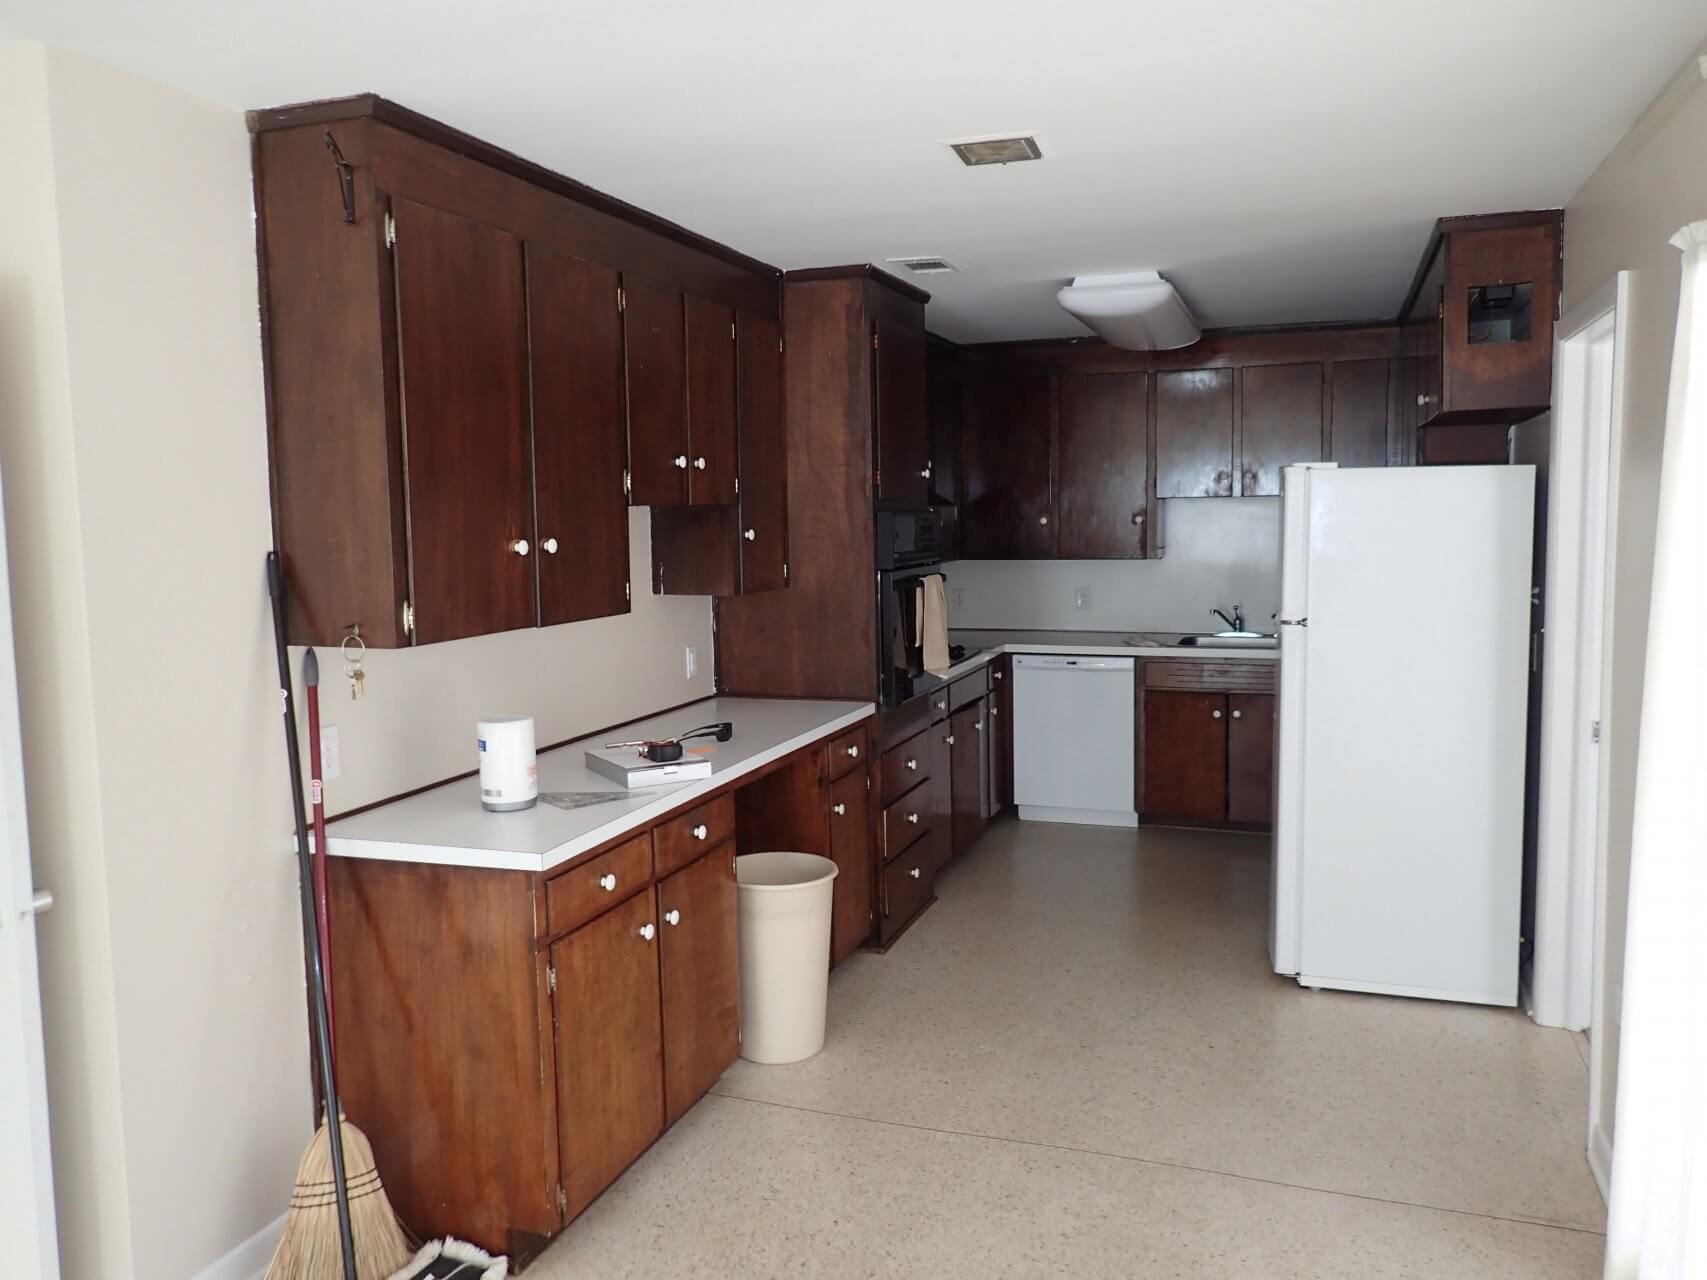 Before: Old dark brown cabinets in kitchen remodel and linoleum floor